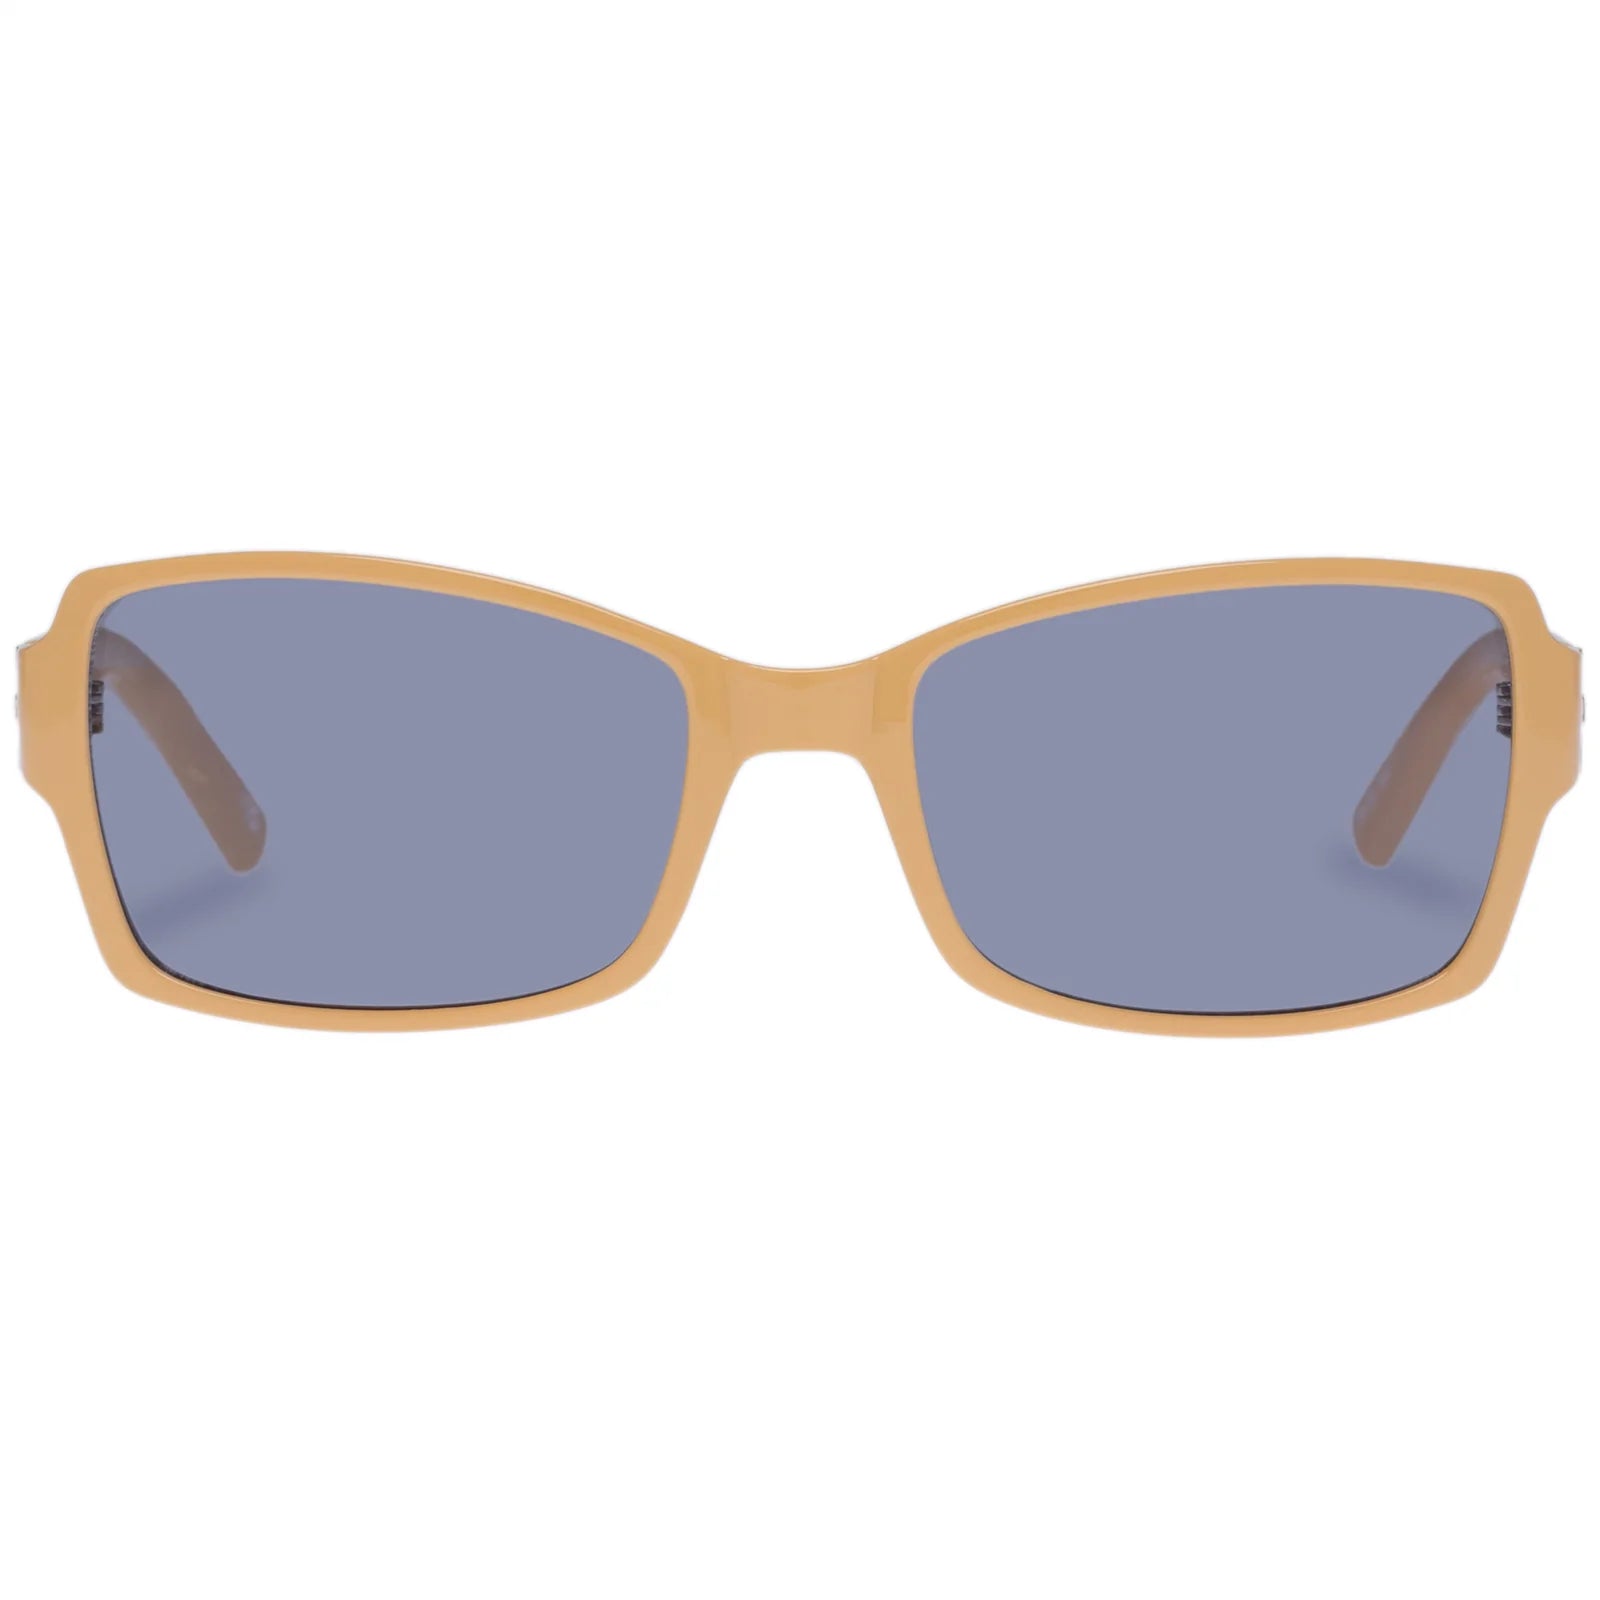 Le Specs Sunglasses - Trance - Mustard Putty